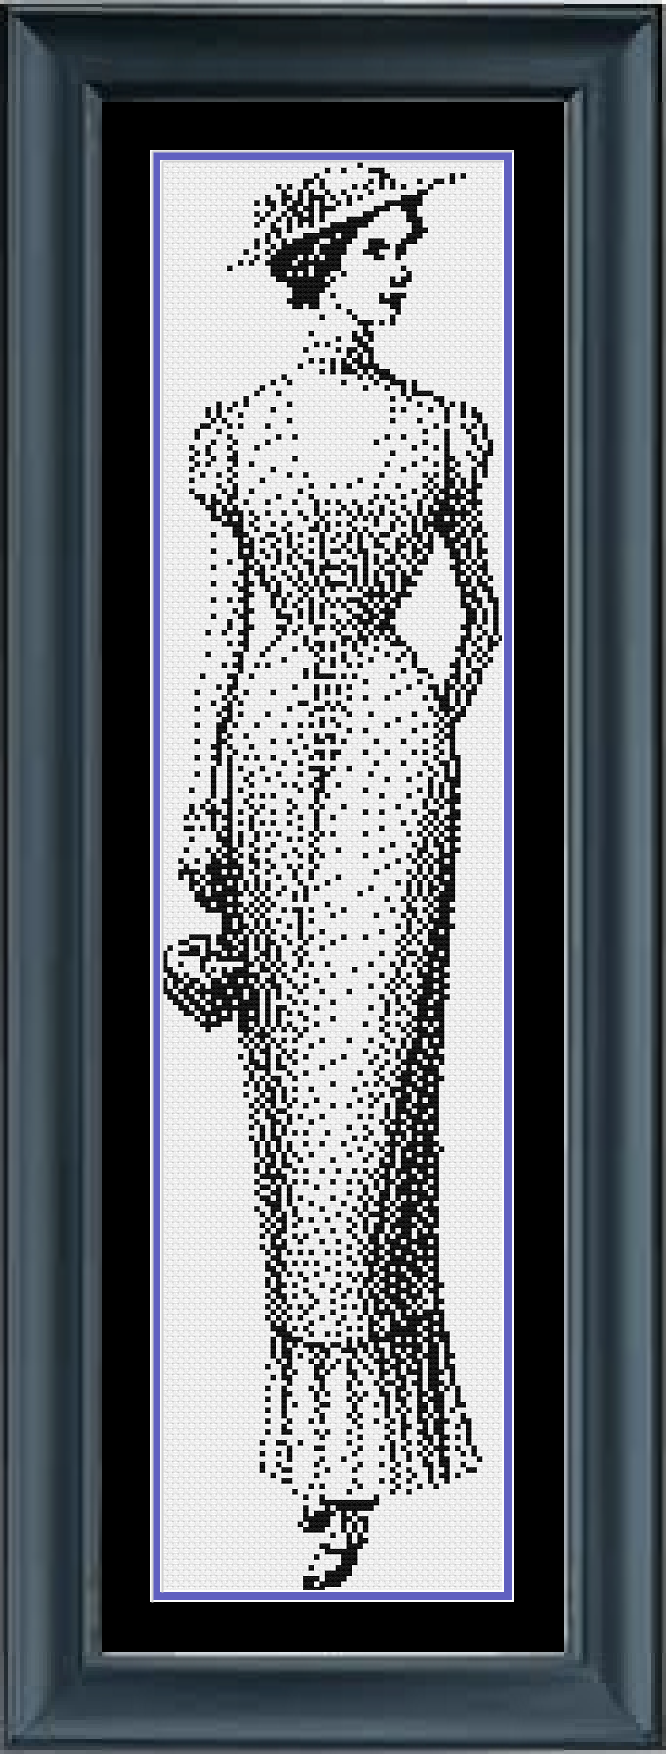 Vintage Fancy Lady Counted Cross Stitch Pattern | Monochrome Cross Stitch | Instant Download PDF